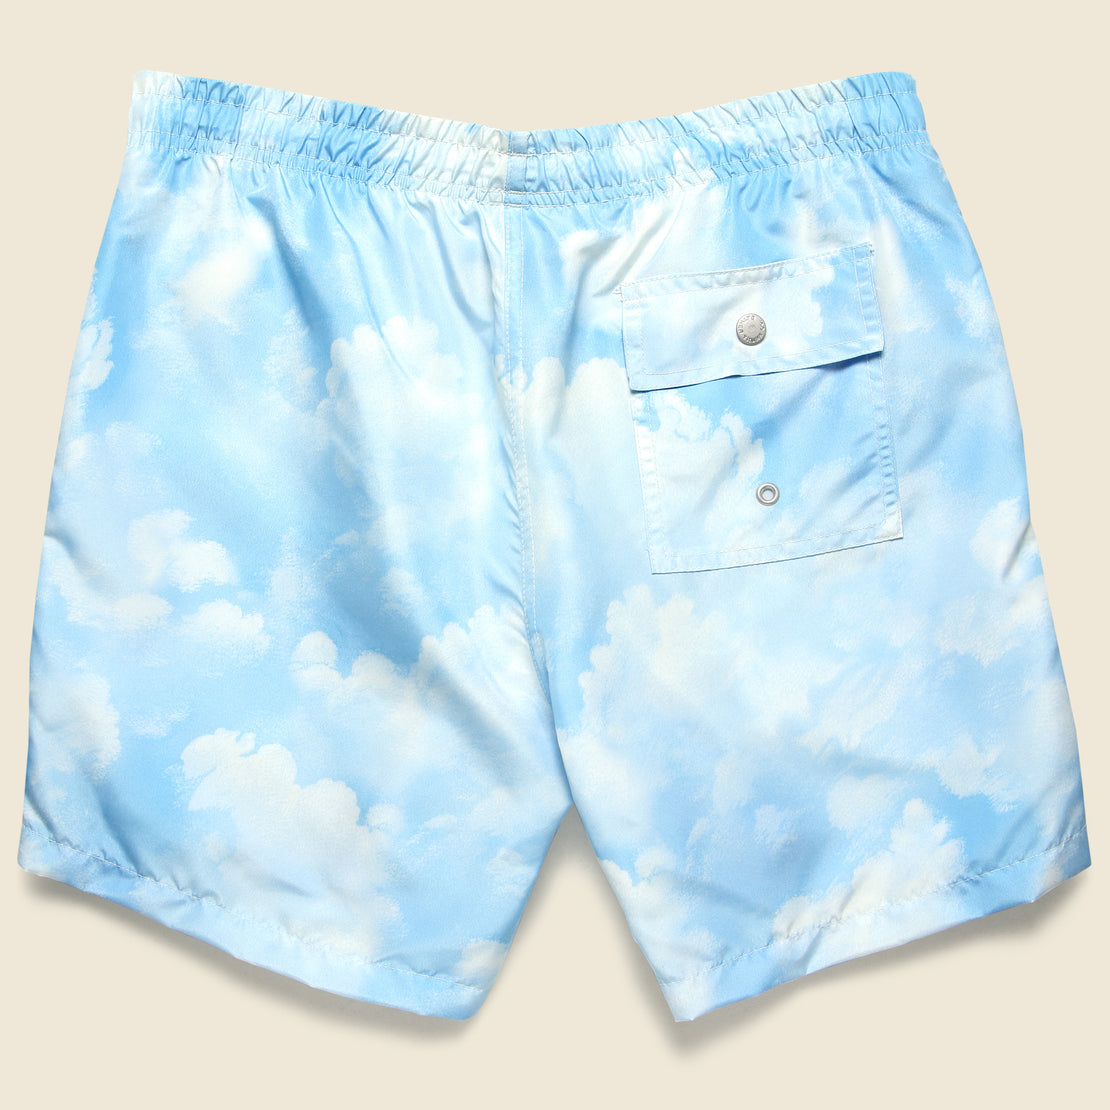 Cloud Pattern Swim Trunk - Baby Blue - Bather - STAG Provisions - Shorts - Swim